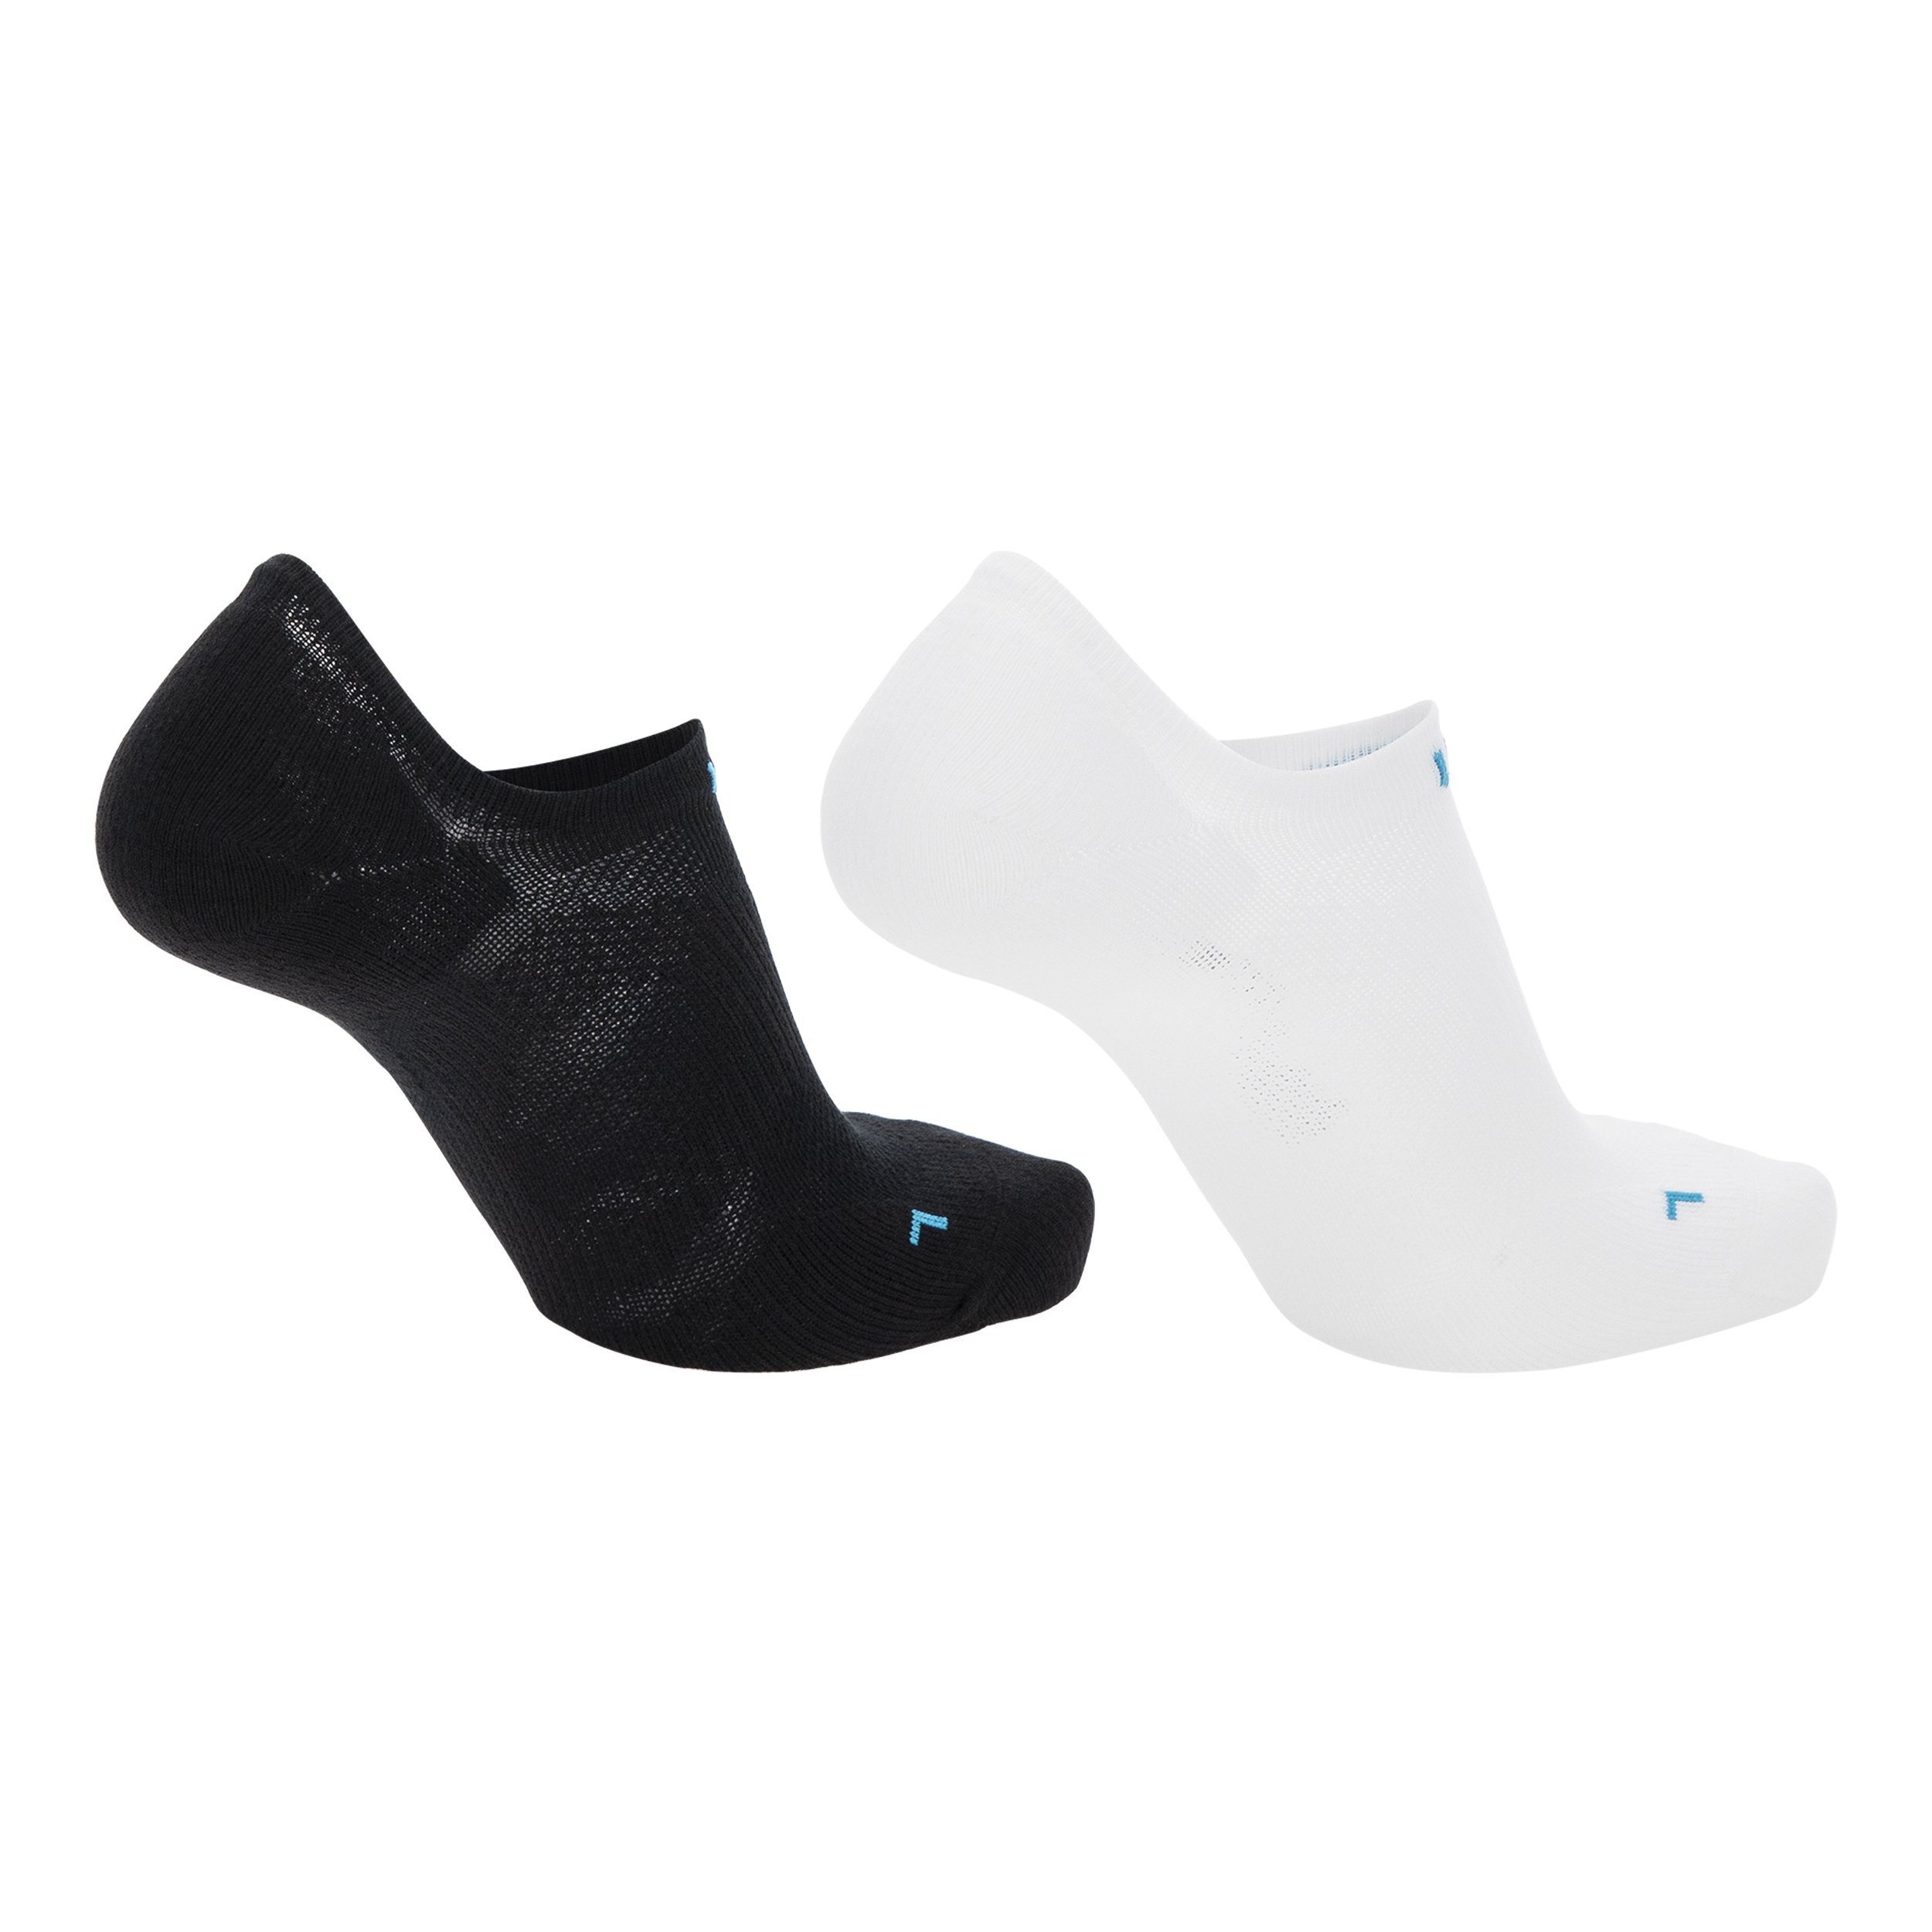 Ponožky UYN SNEAKER 4.0 SOCKS 2PRS PACK UNISEX - biela/čierna